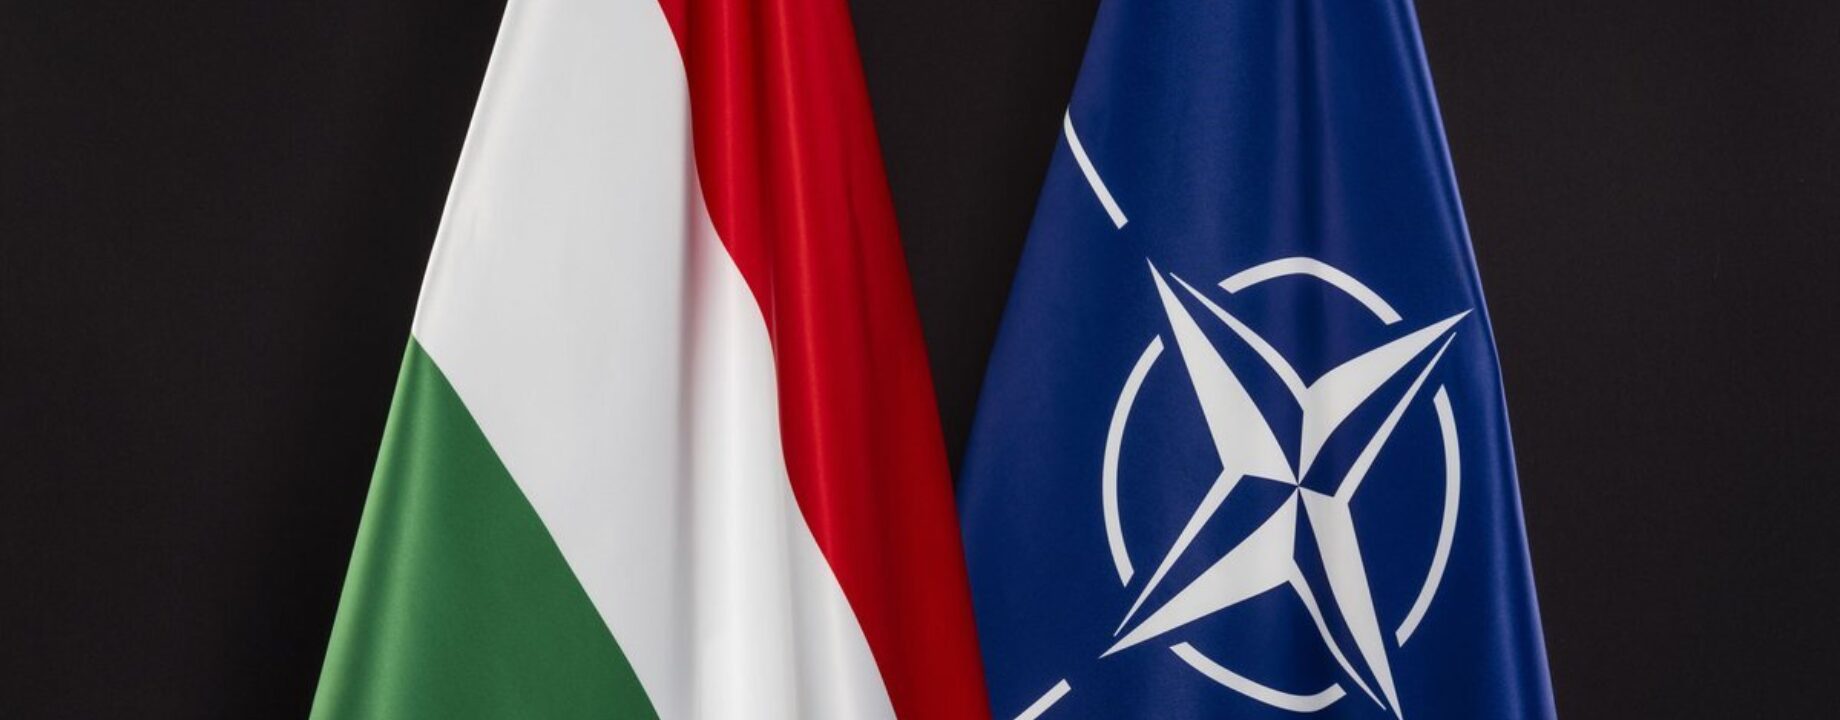 Magyarország NATO